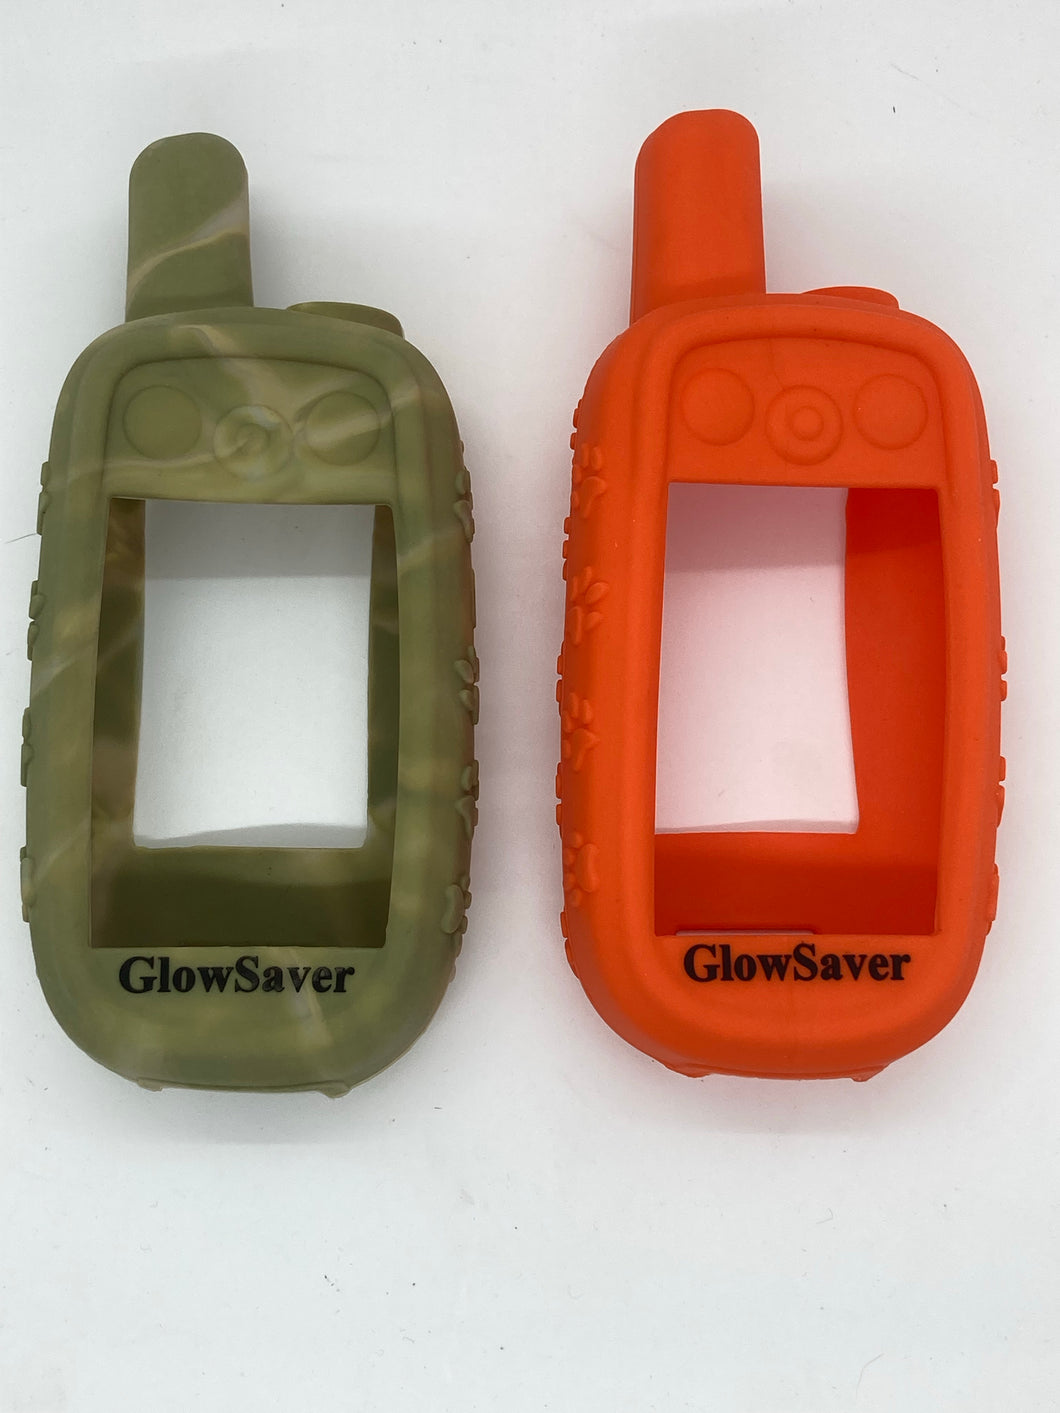 Garmin alpha 100 glow saver cases